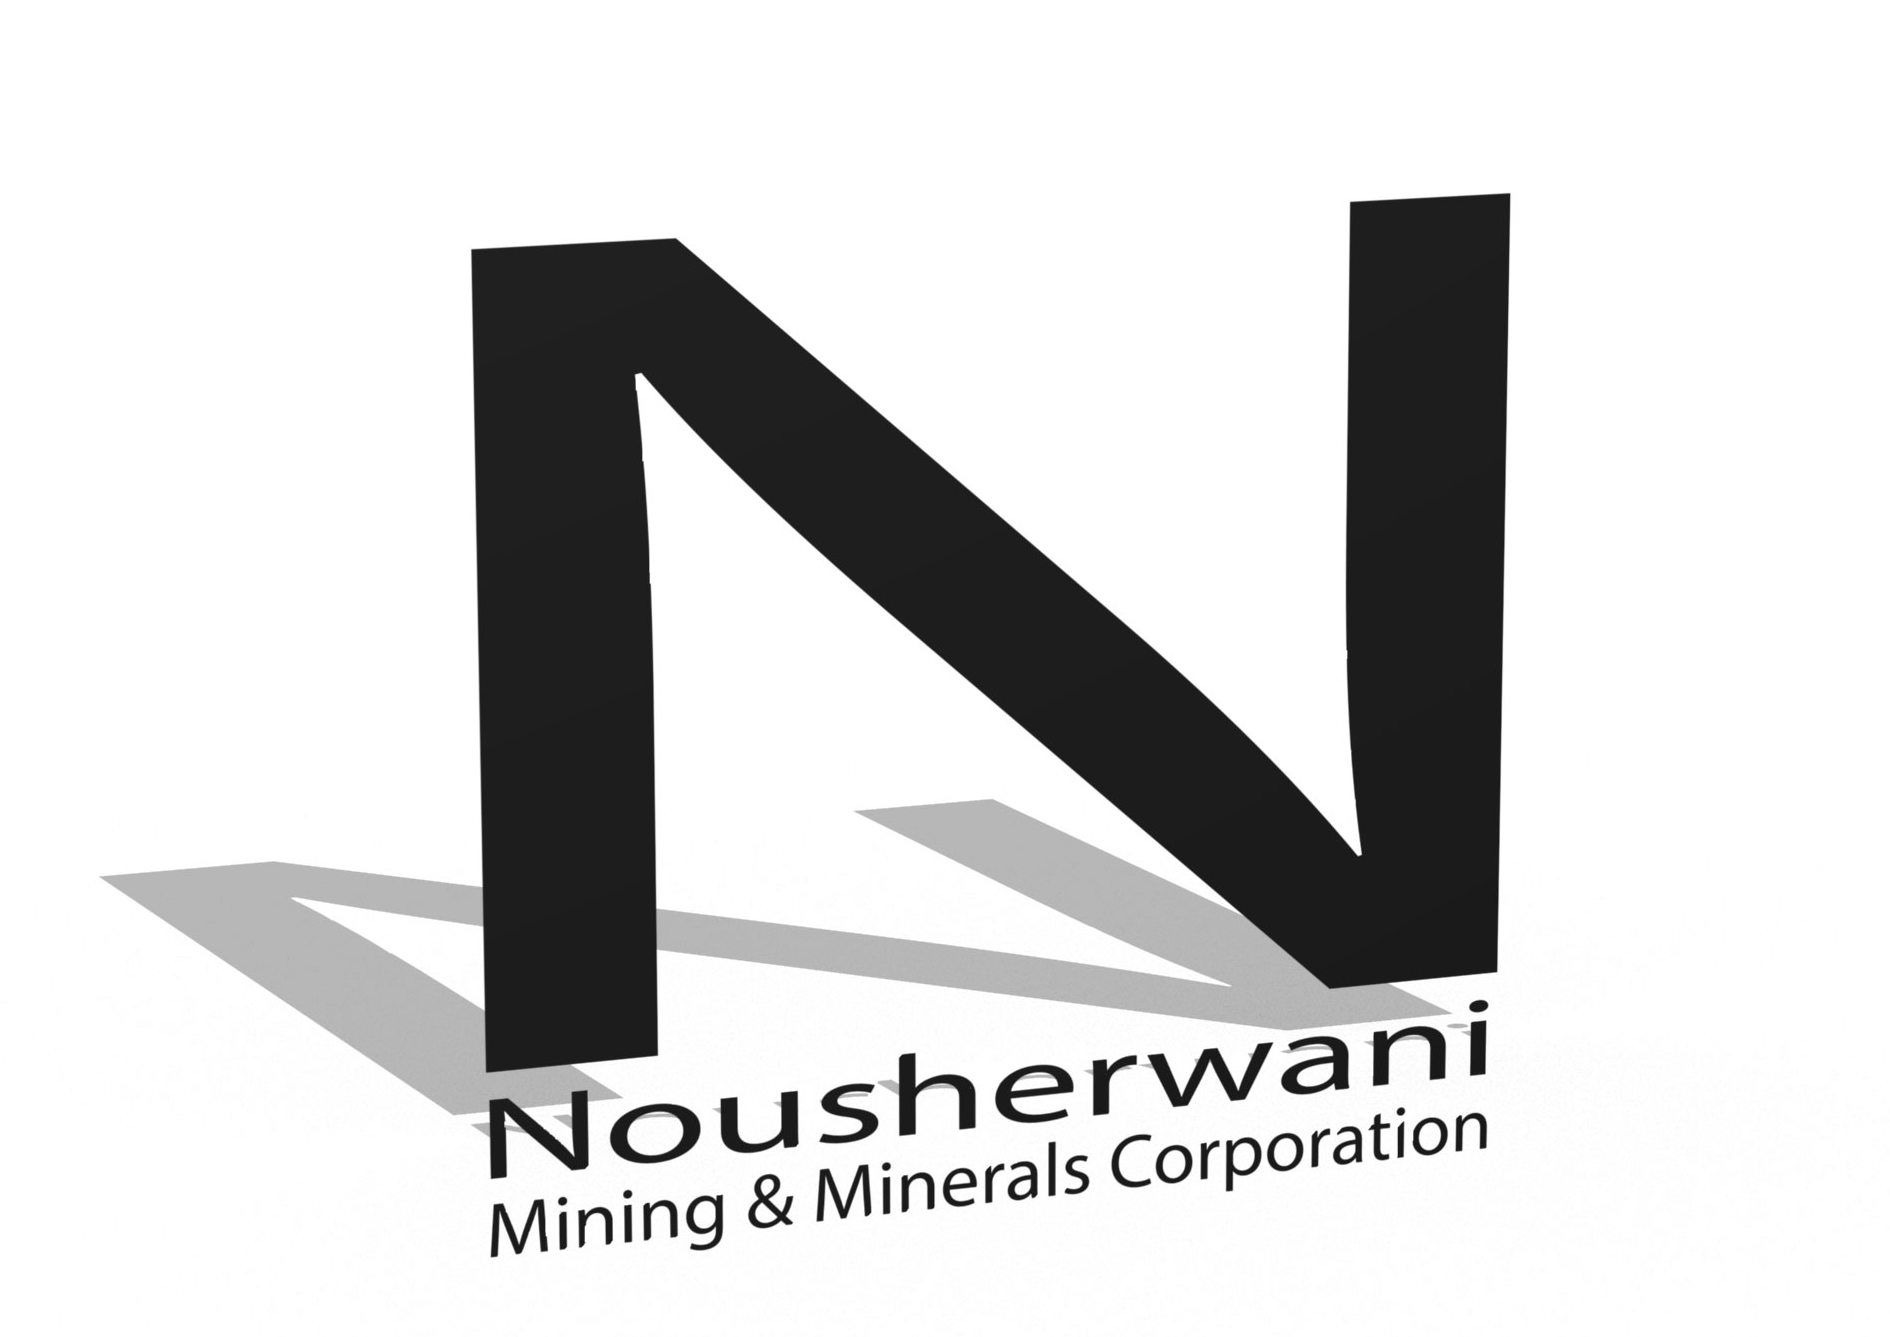 Nousherwani Mining & Minerals Corporation